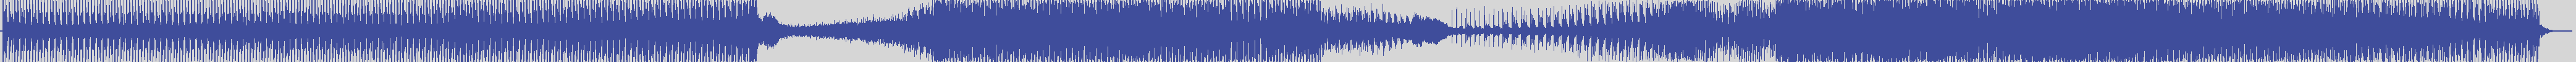 vitti_records [VIT006] Aware Project - Karuna [Original] audio wave form